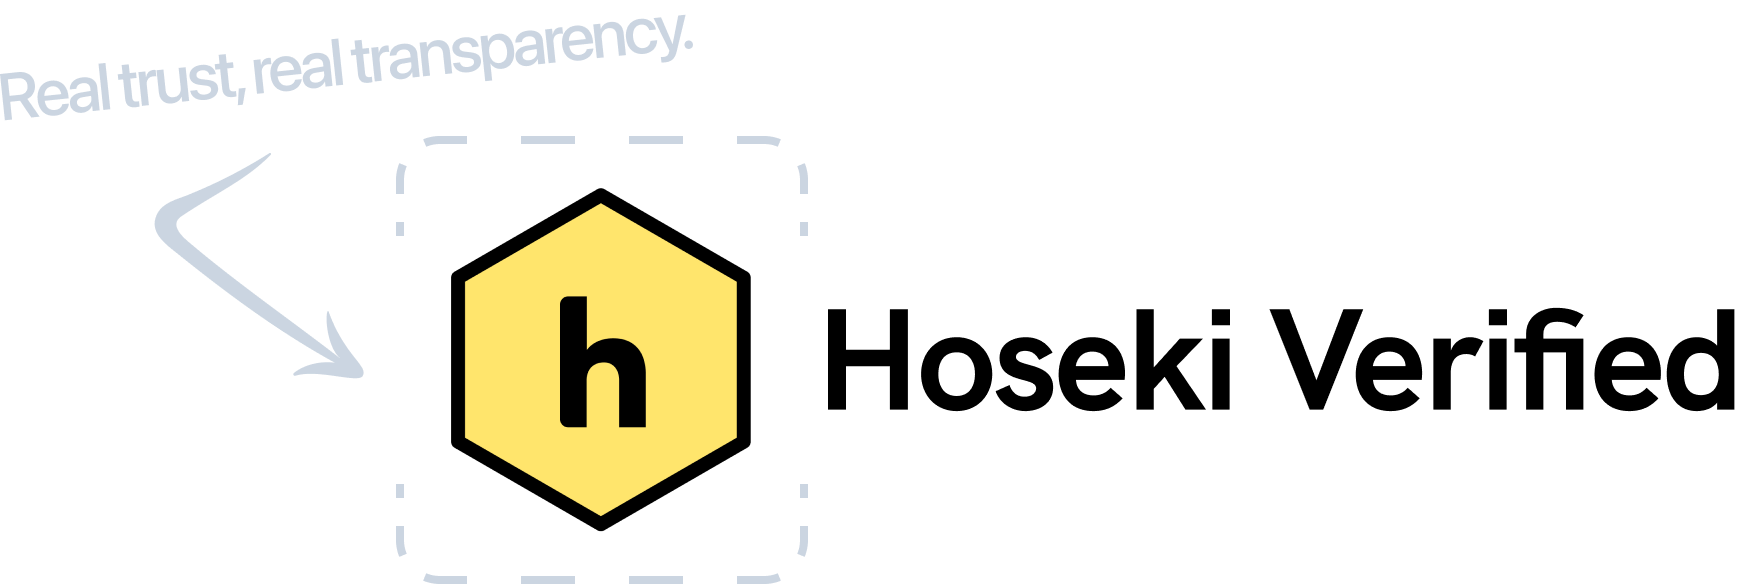 Hoseki Verified, real trust, real transparency